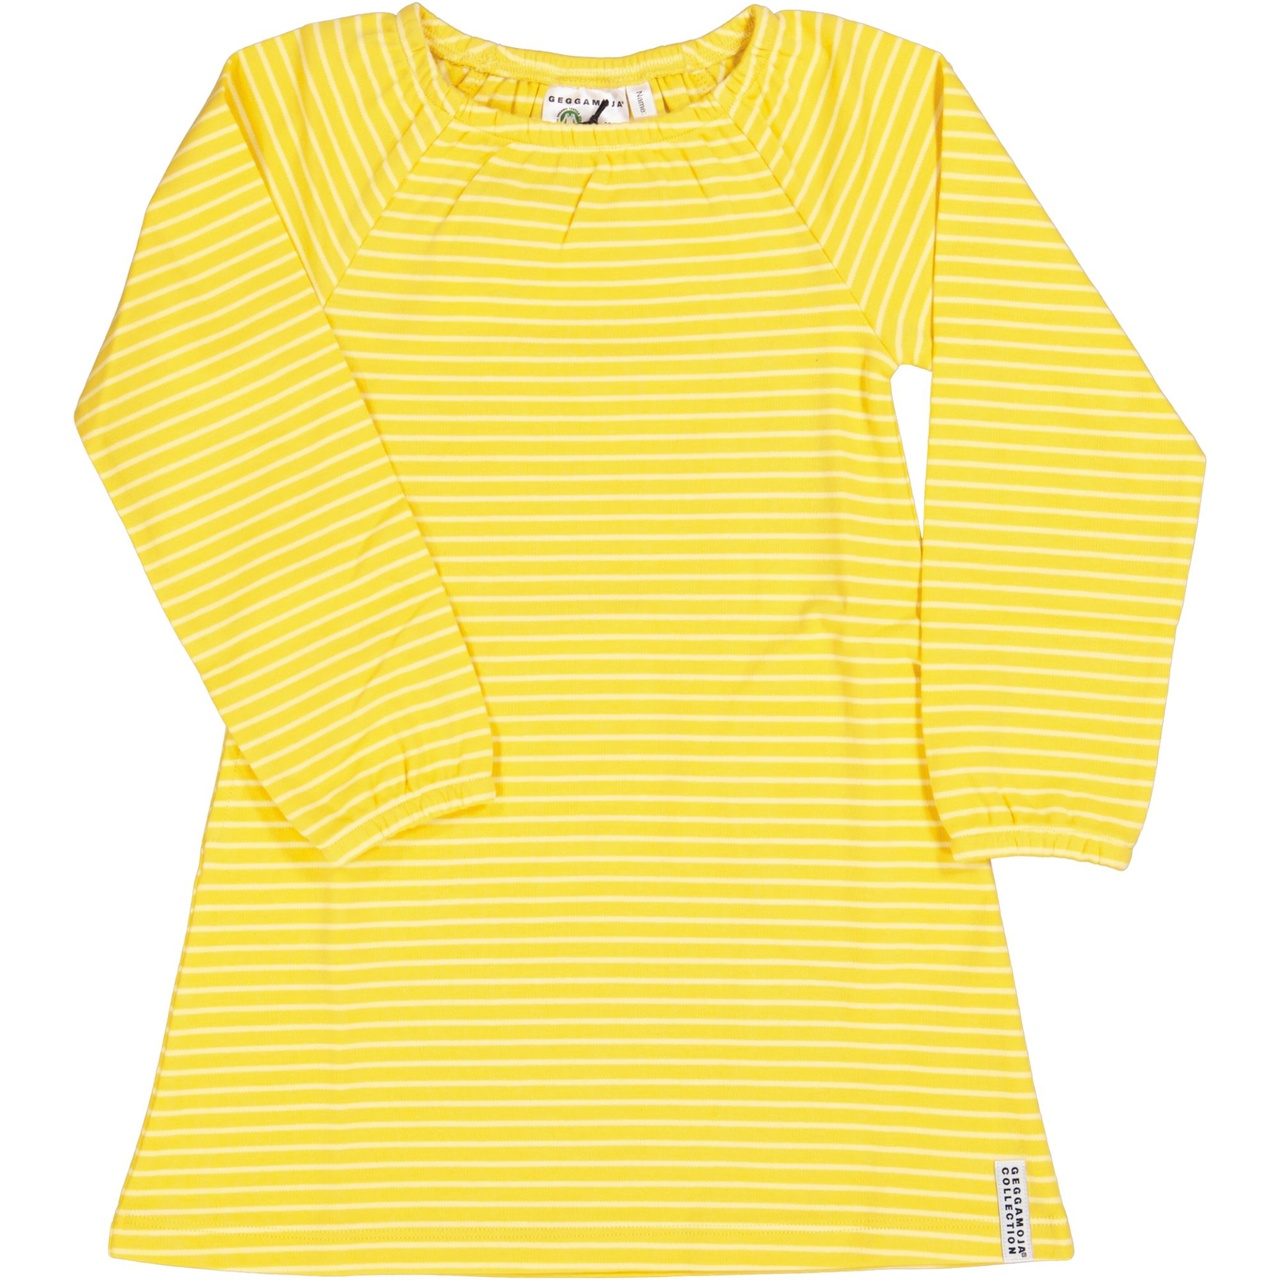 Singoalla dress D.yellow/yellow 122/128